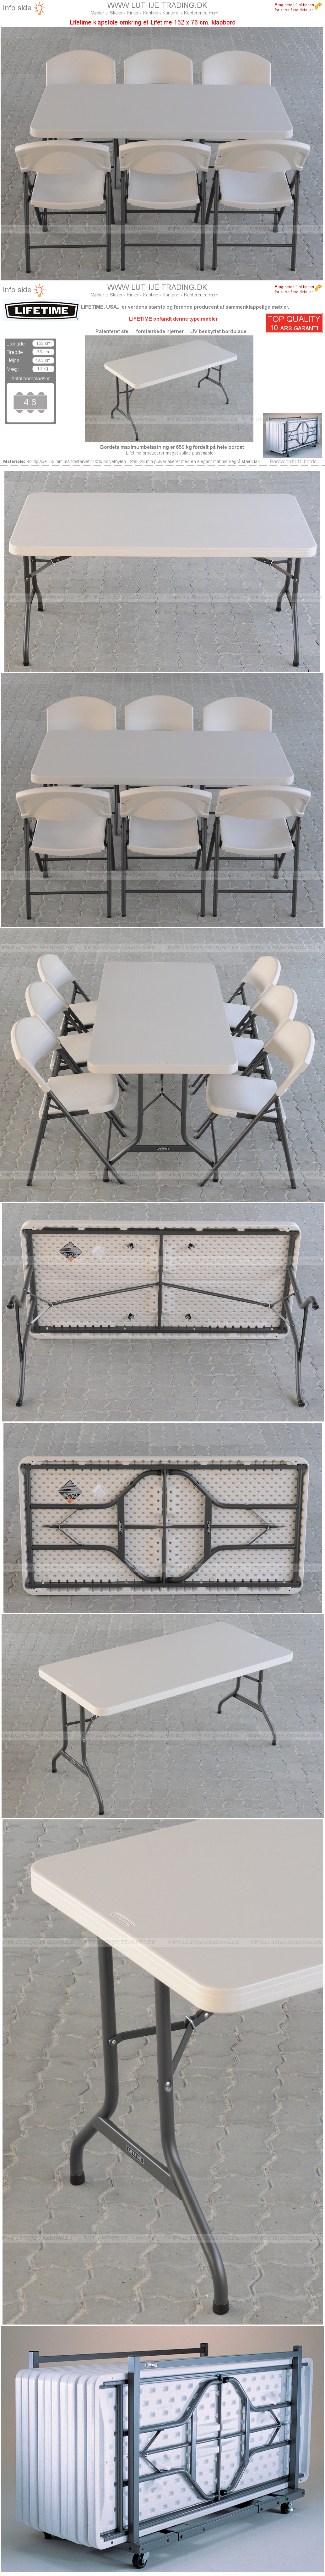 Plaststole med klapbord 152 x 76 cm